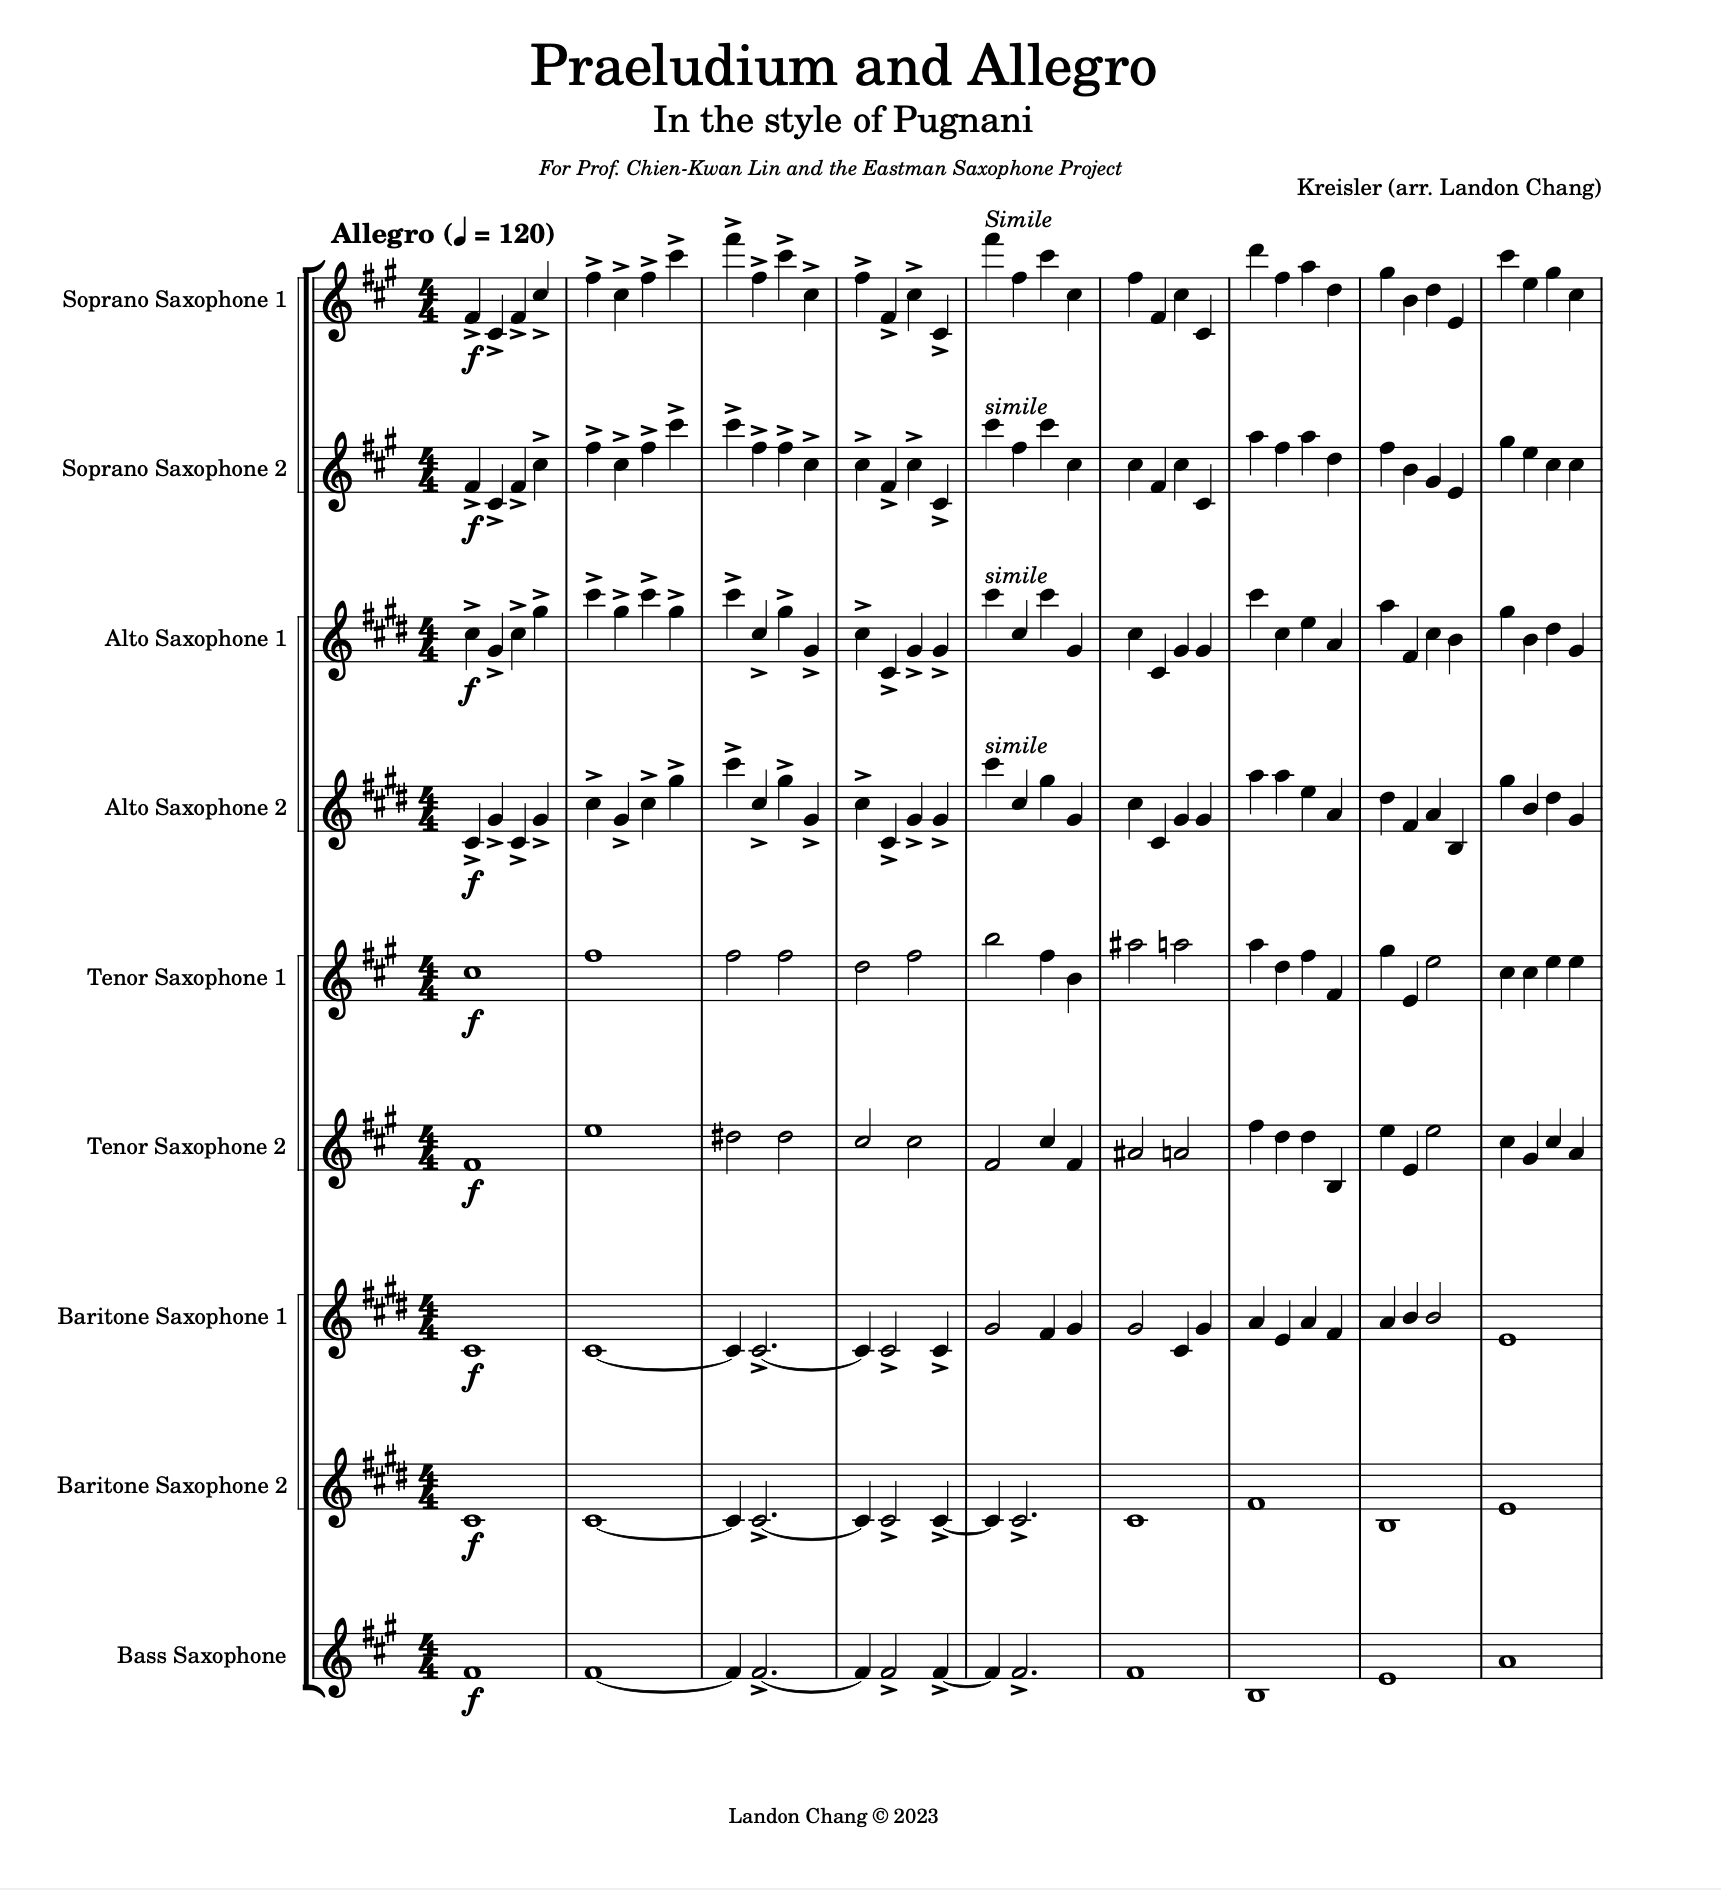 Praeludium And Allegro by Landon Chang